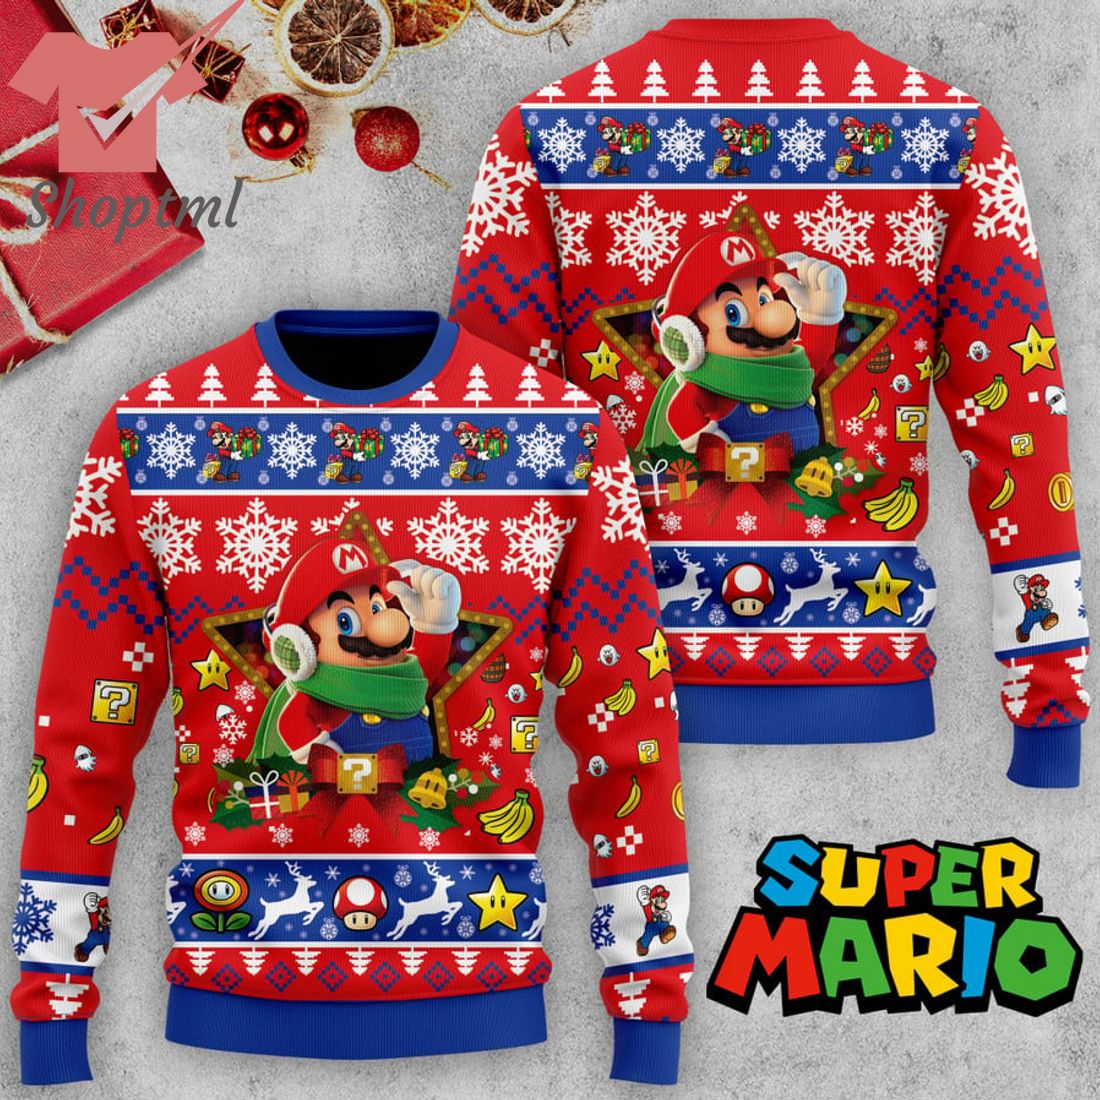 Mario Super Mario Ugly Christmas Sweater